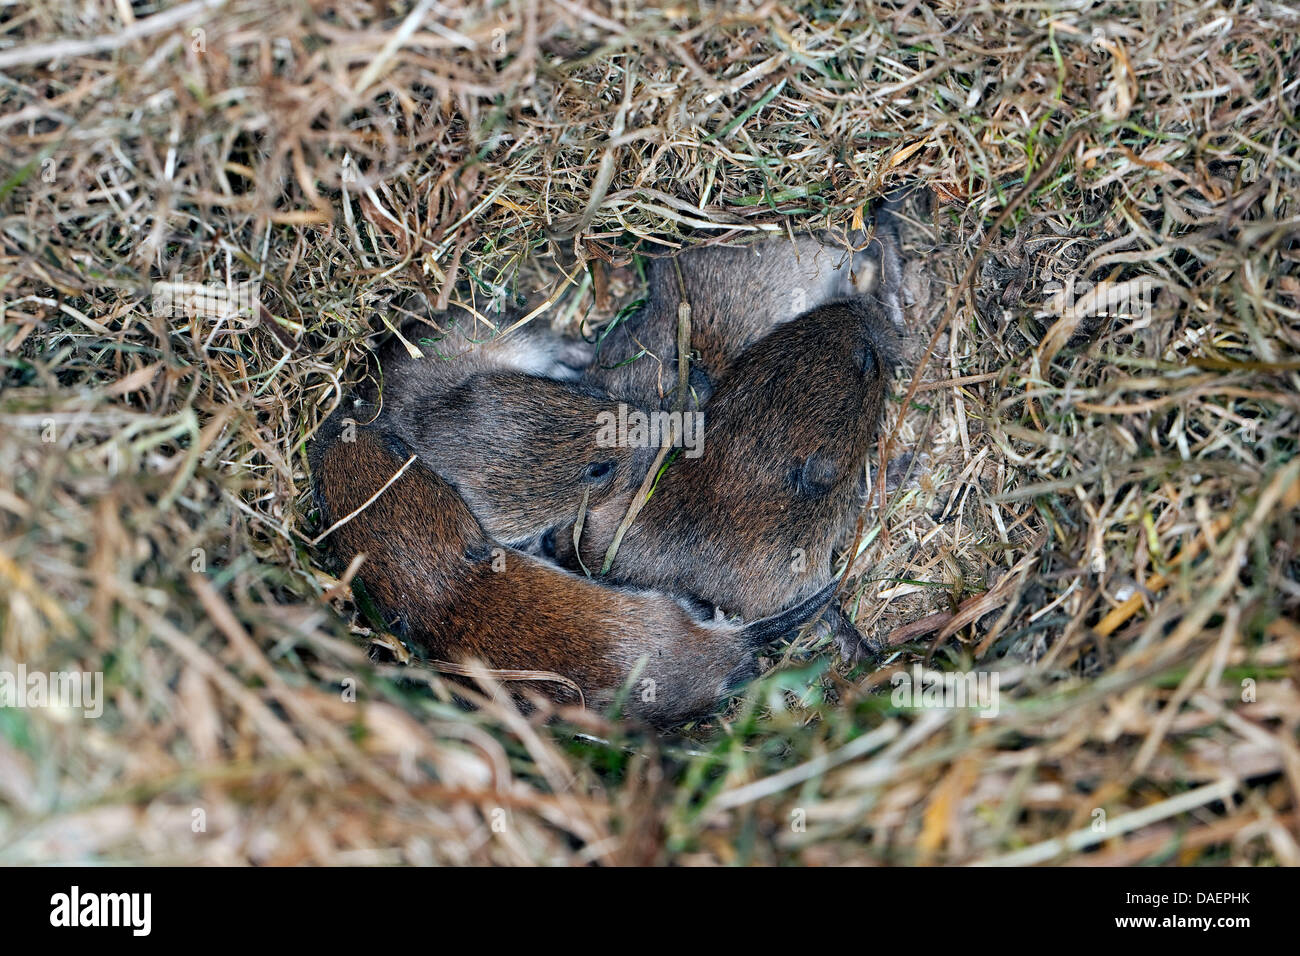 Bank vole (Clethrionomys glareolus, Myodes glareolus), i neonati nel nido, Germania Foto Stock